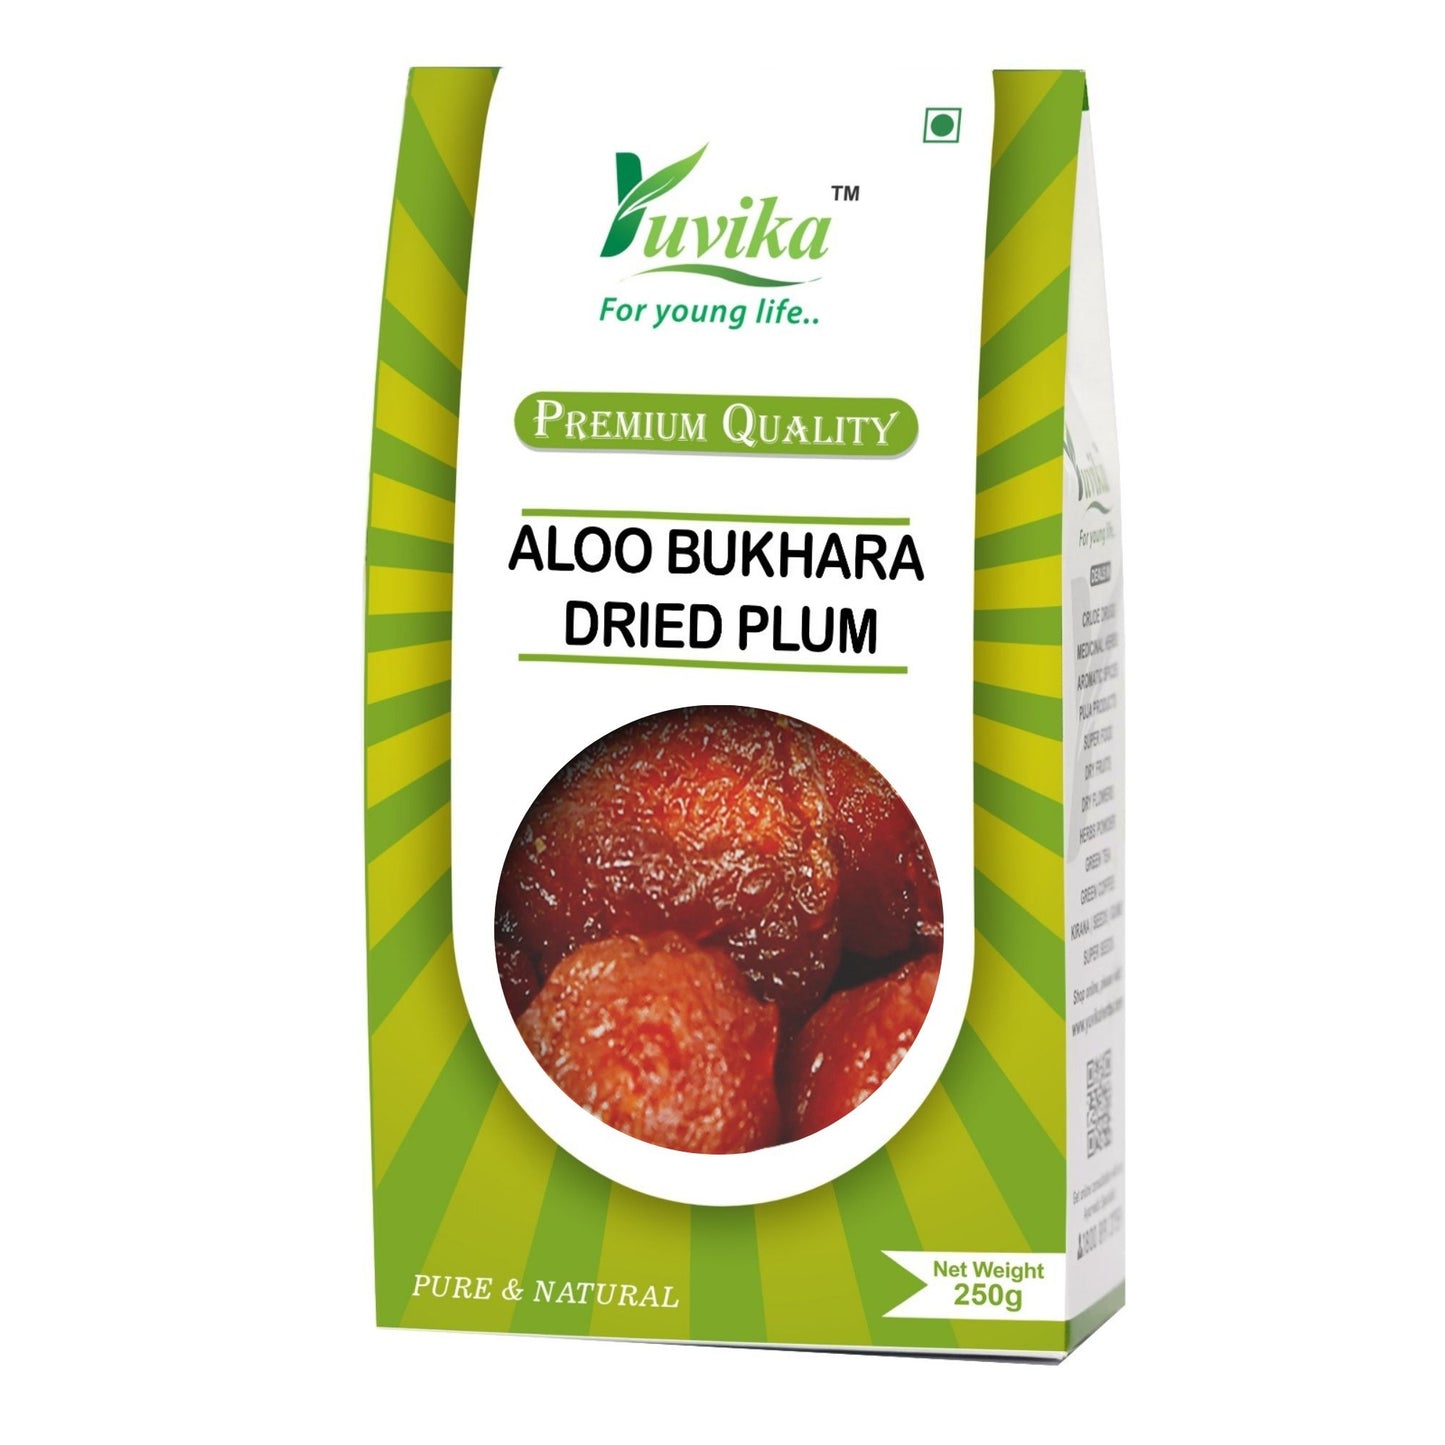 Aloo Bukhara Dry - Subgenus Prunus - Dried Plum (250g)